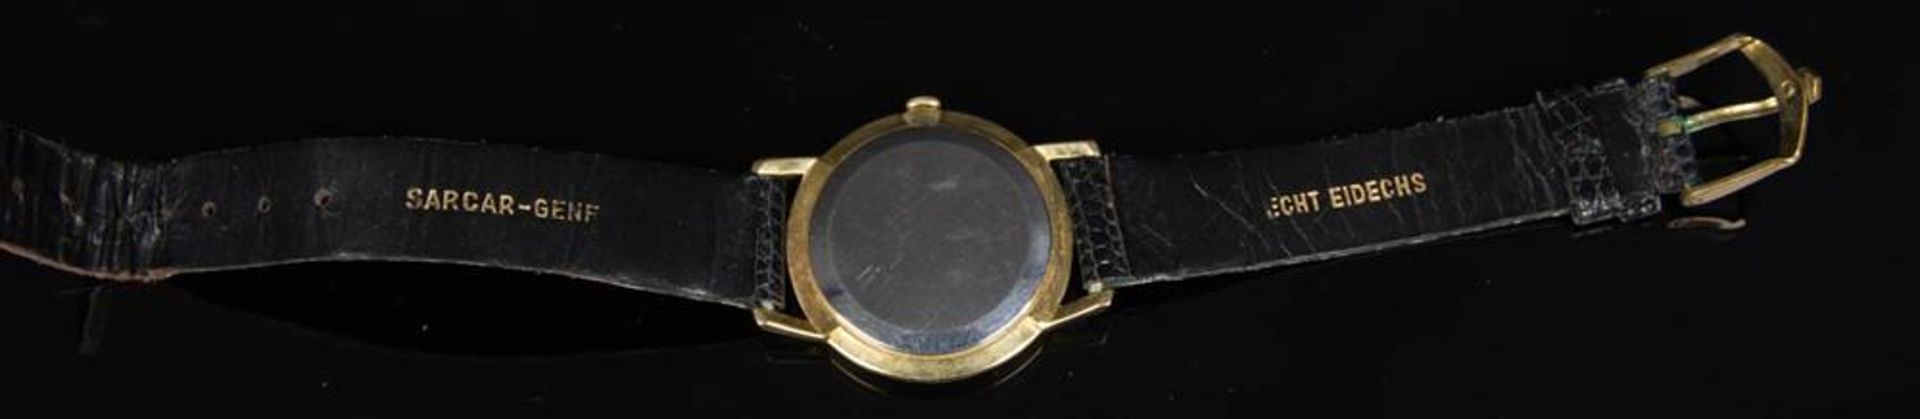 Sarcar-Geneve Armbanduhr, 1960er. - Bild 5 aus 5